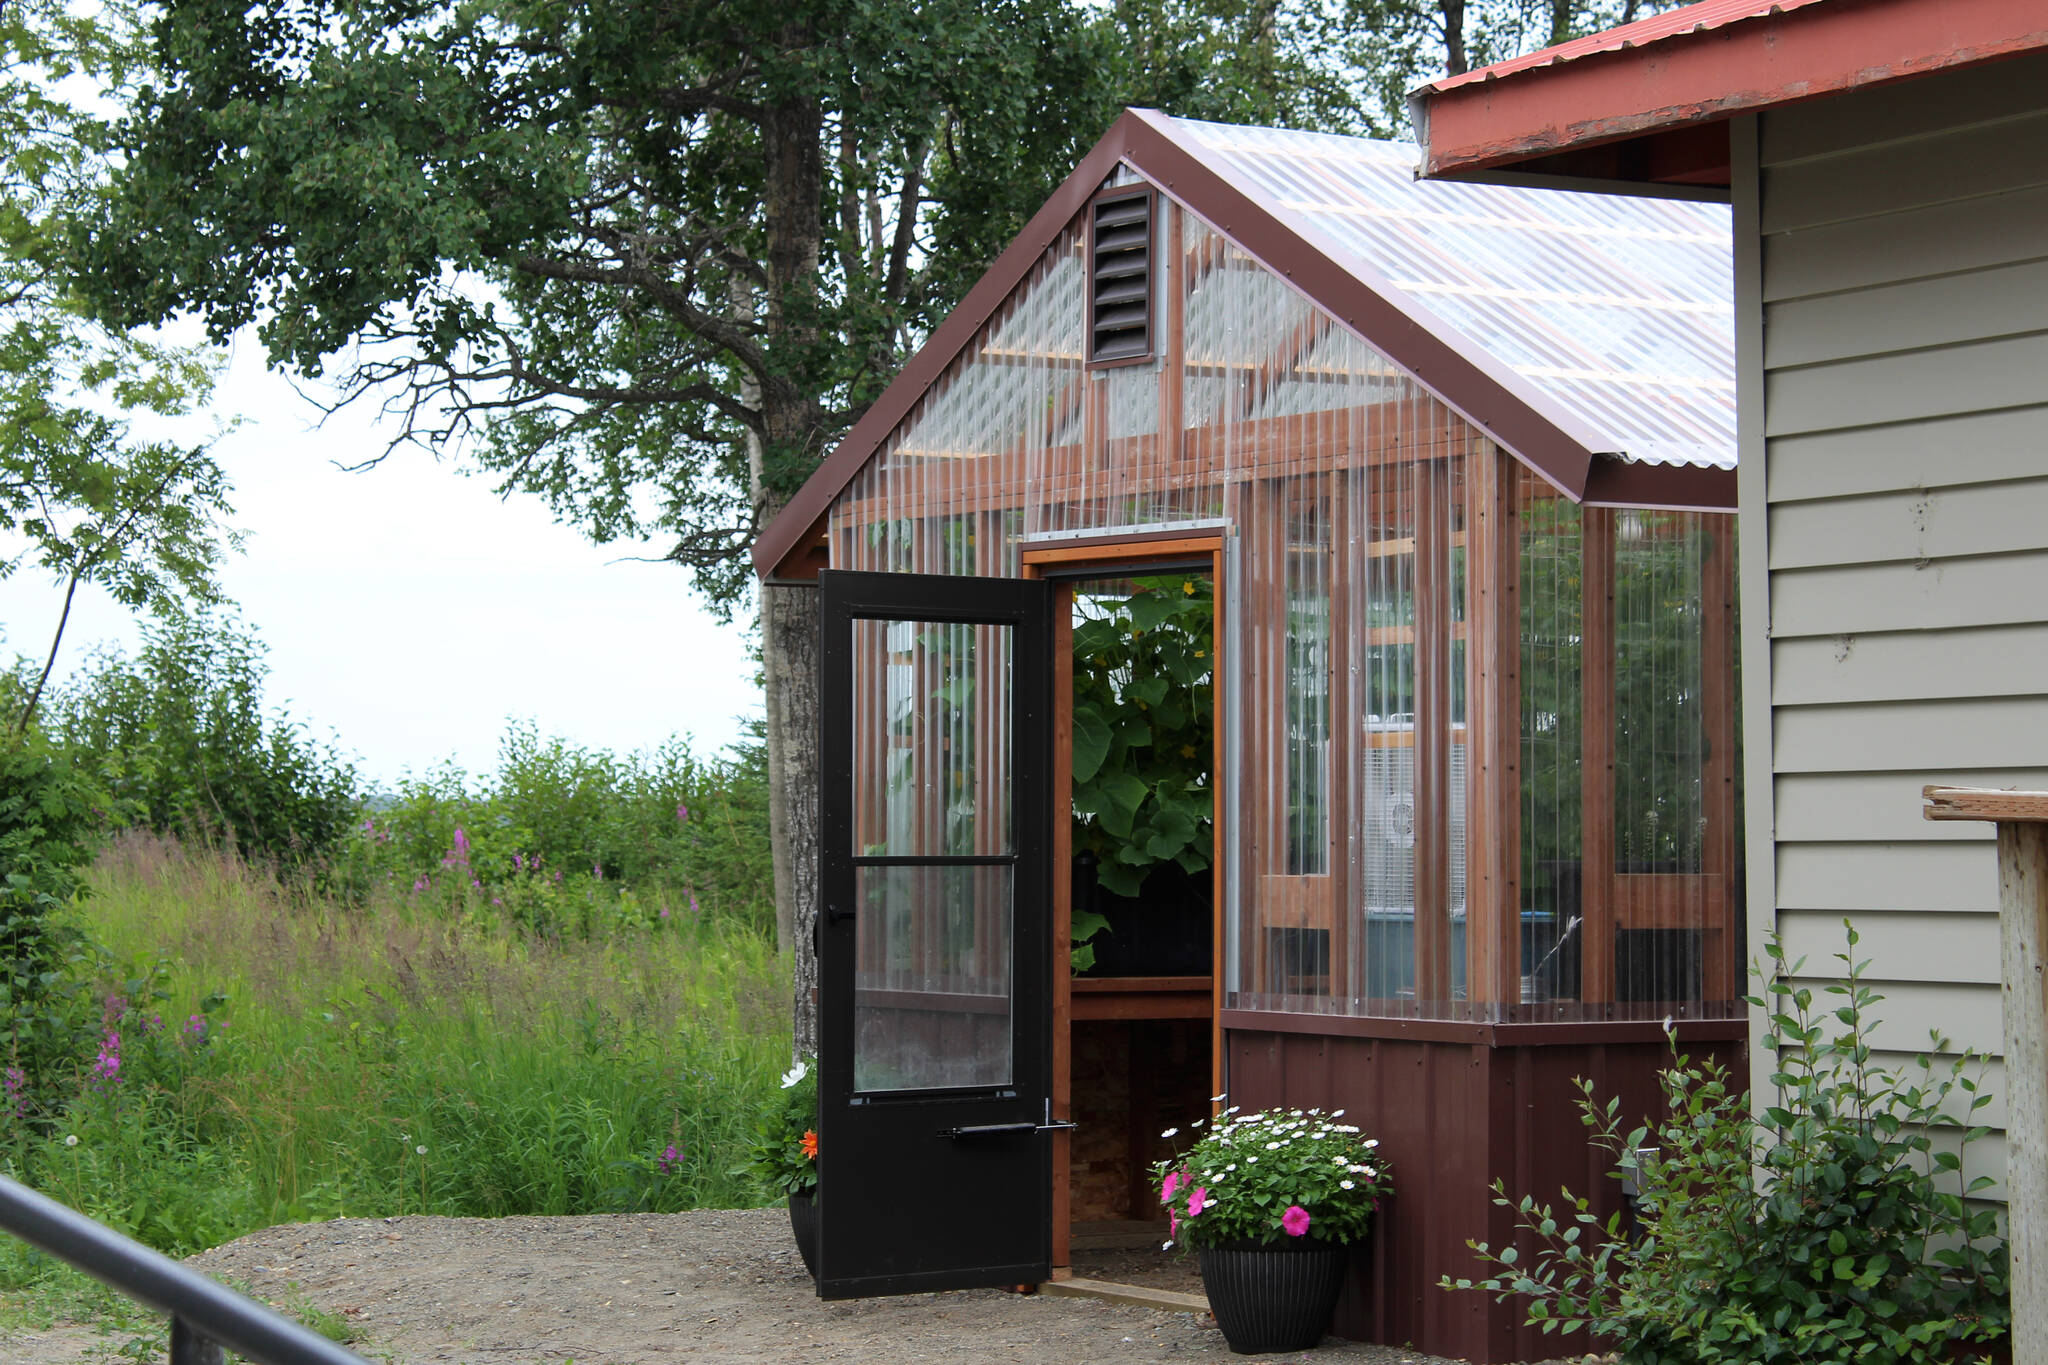 The door to a greenhouse dedicated to Bill Osborn stands open on Tuesday, July 12, 2022 in Kenai, Alaska. (Ashlyn O’Hara/Peninsula Clarion)